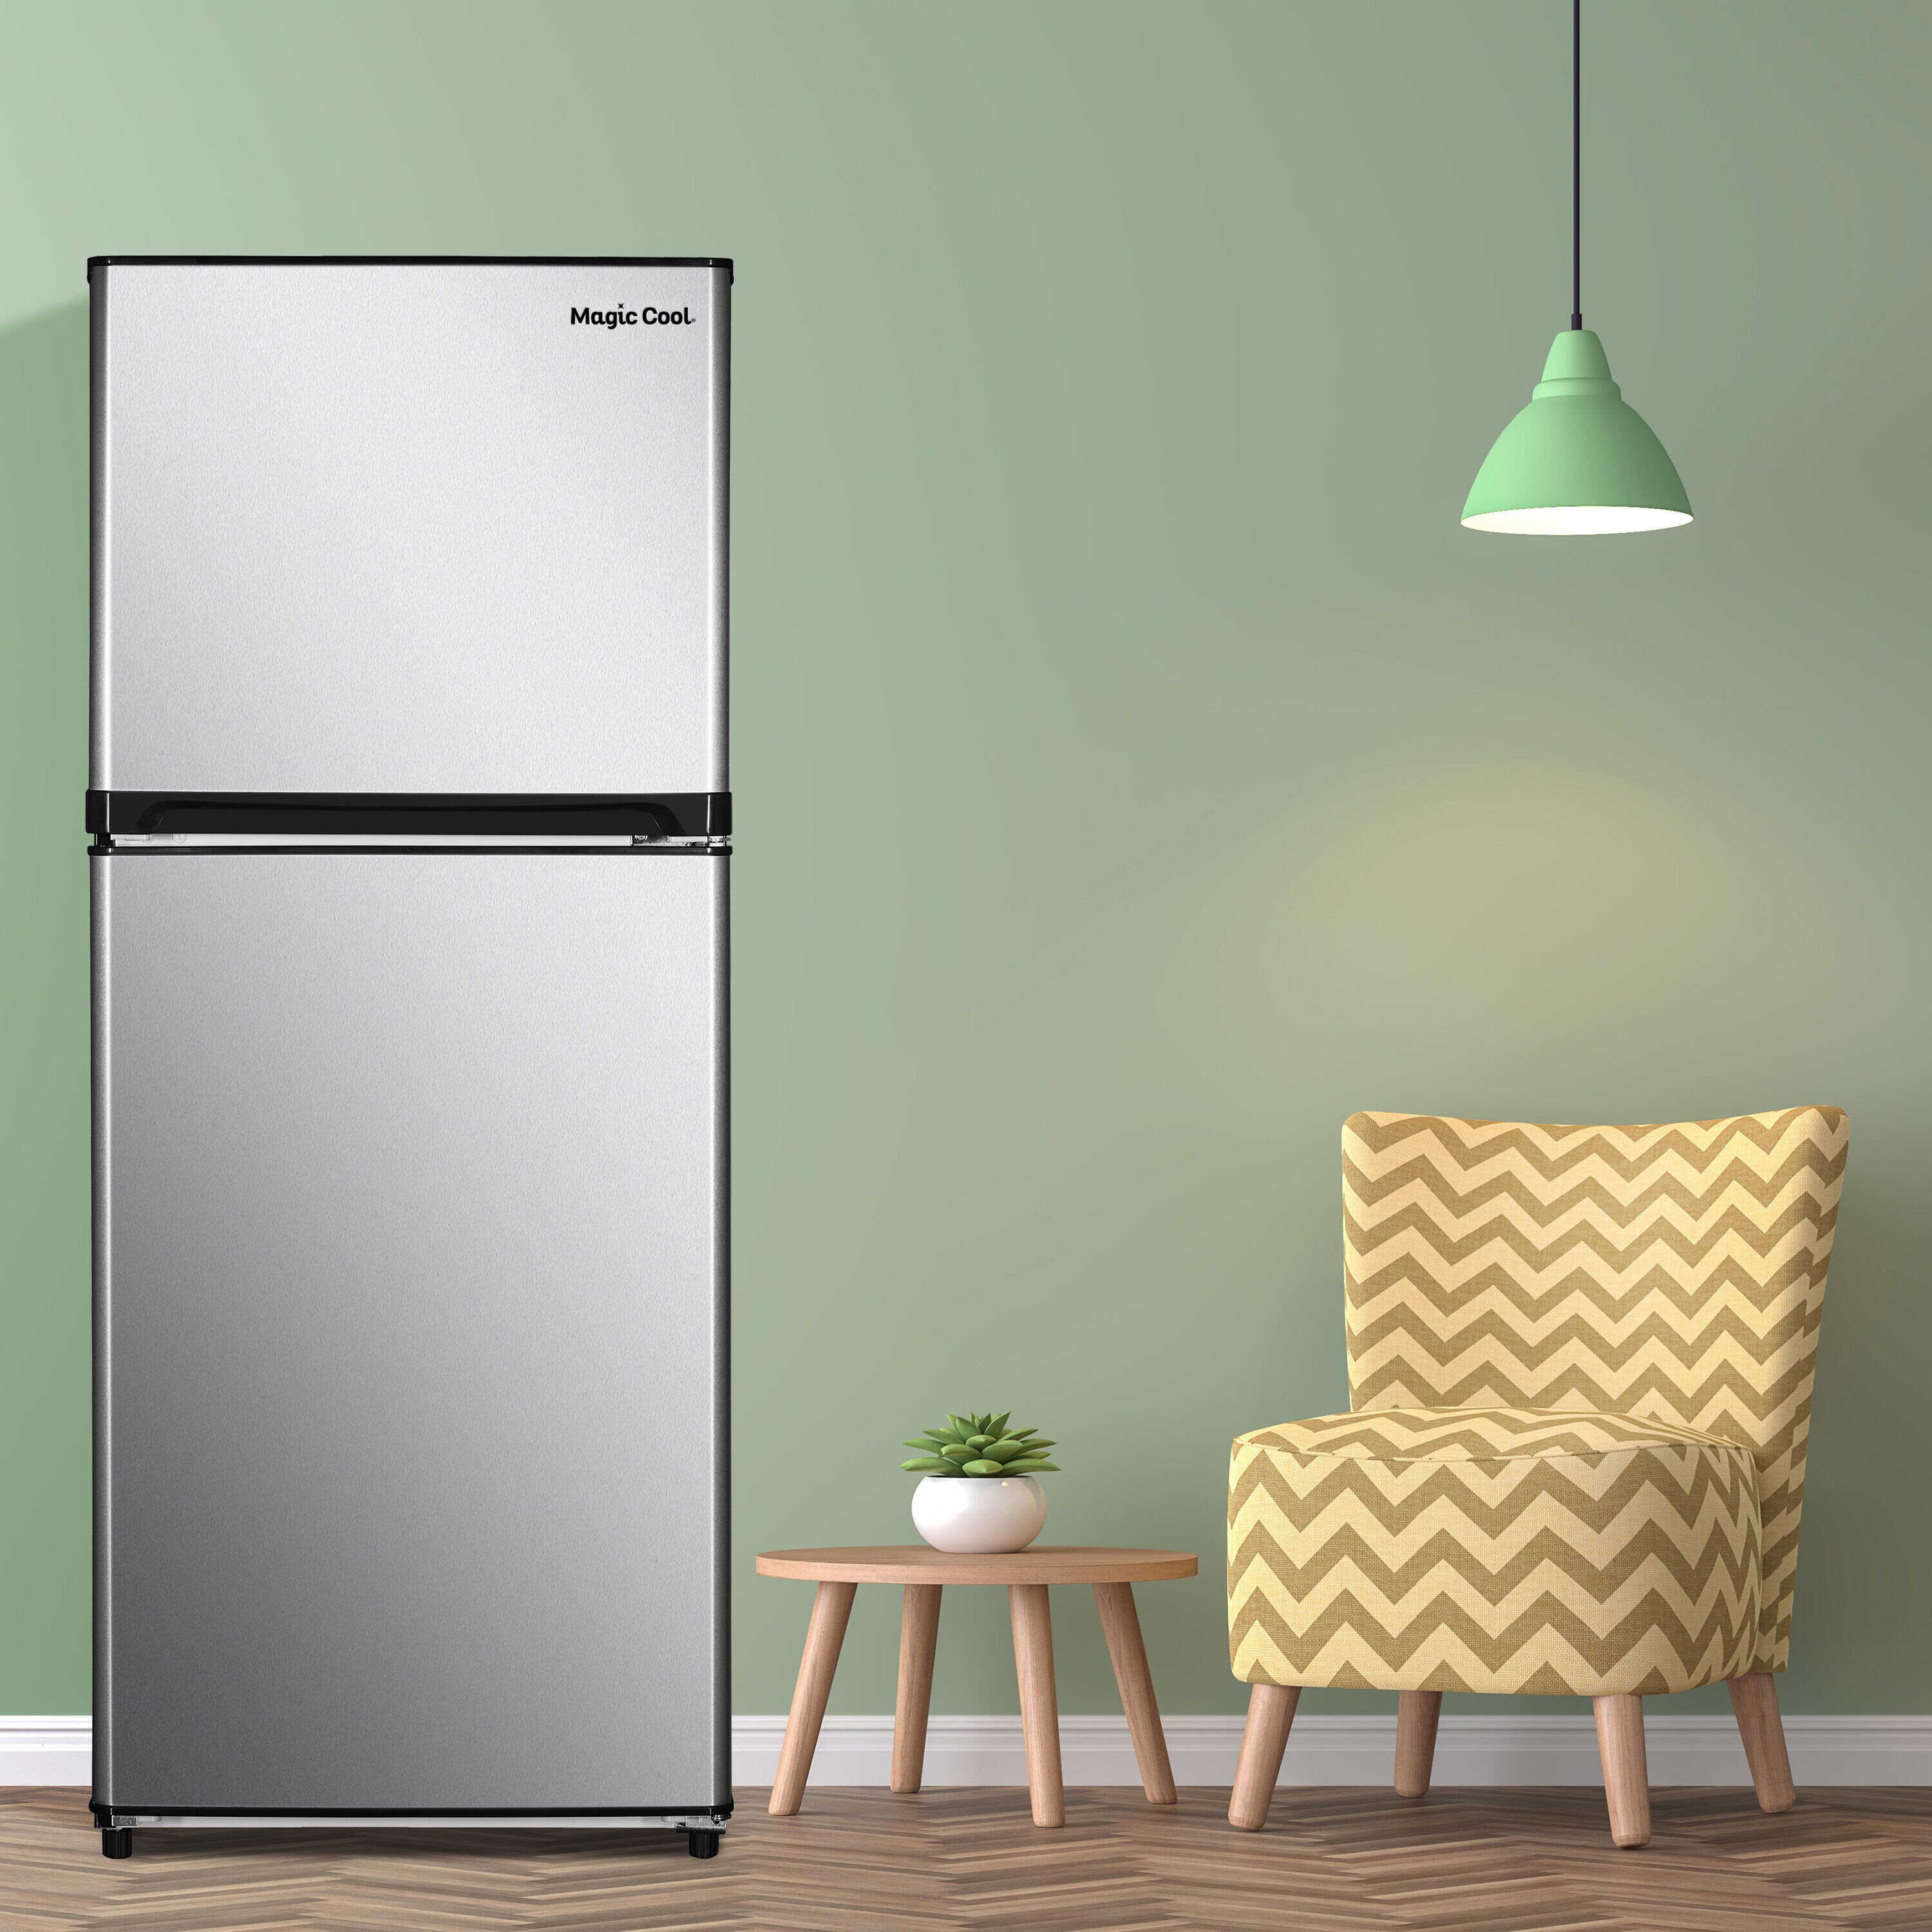 Avanti Magic Cool 12.7-cu ft Counter-depth Top-Freezer Refrigerator ...